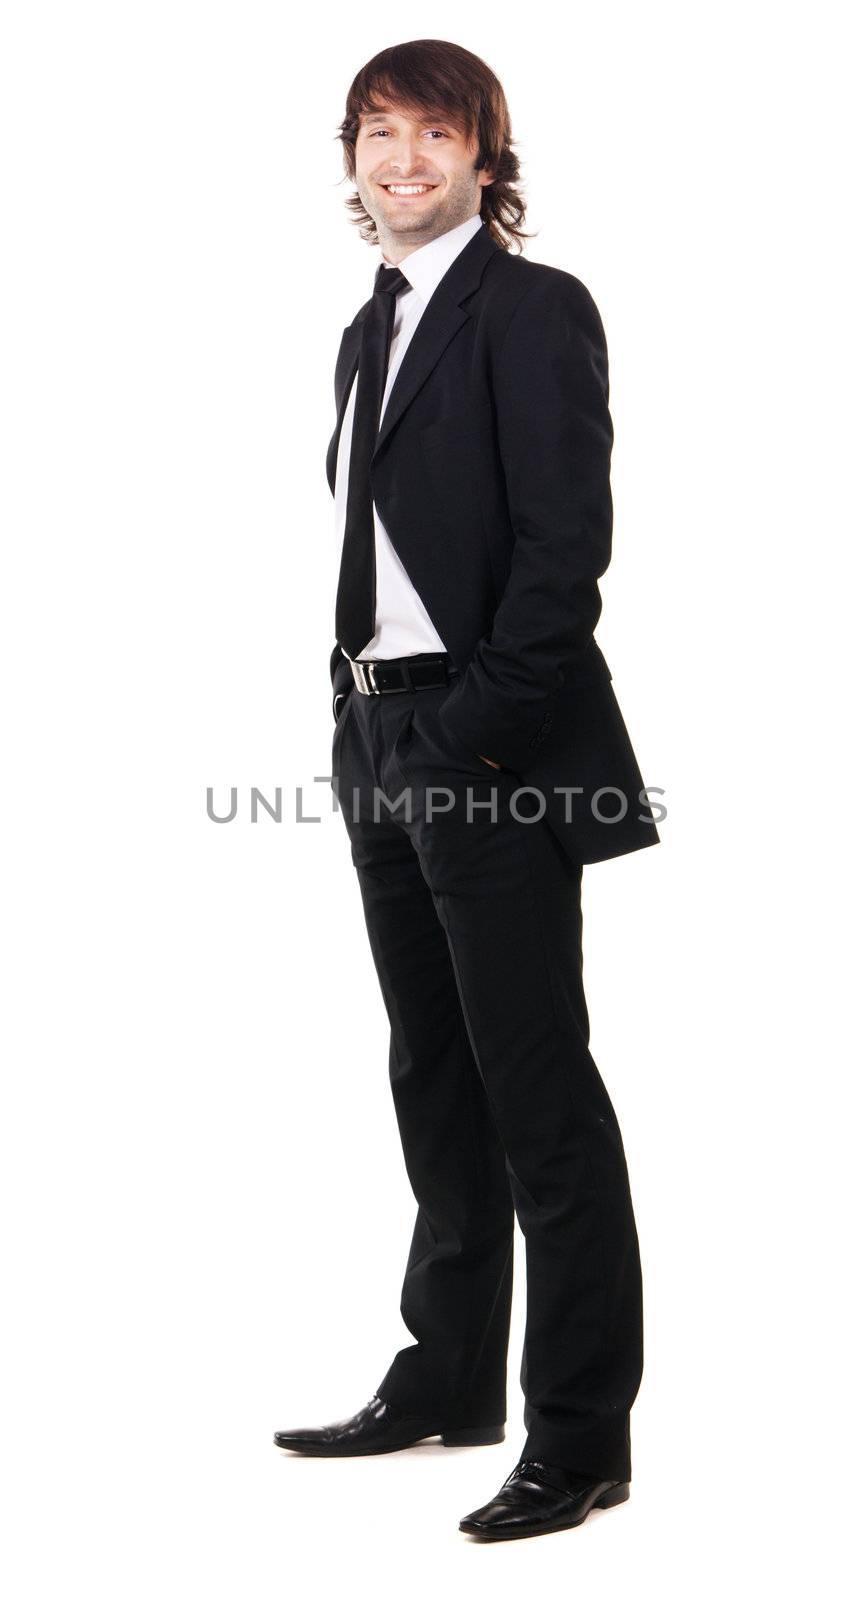 Elegant man in black suit against white background